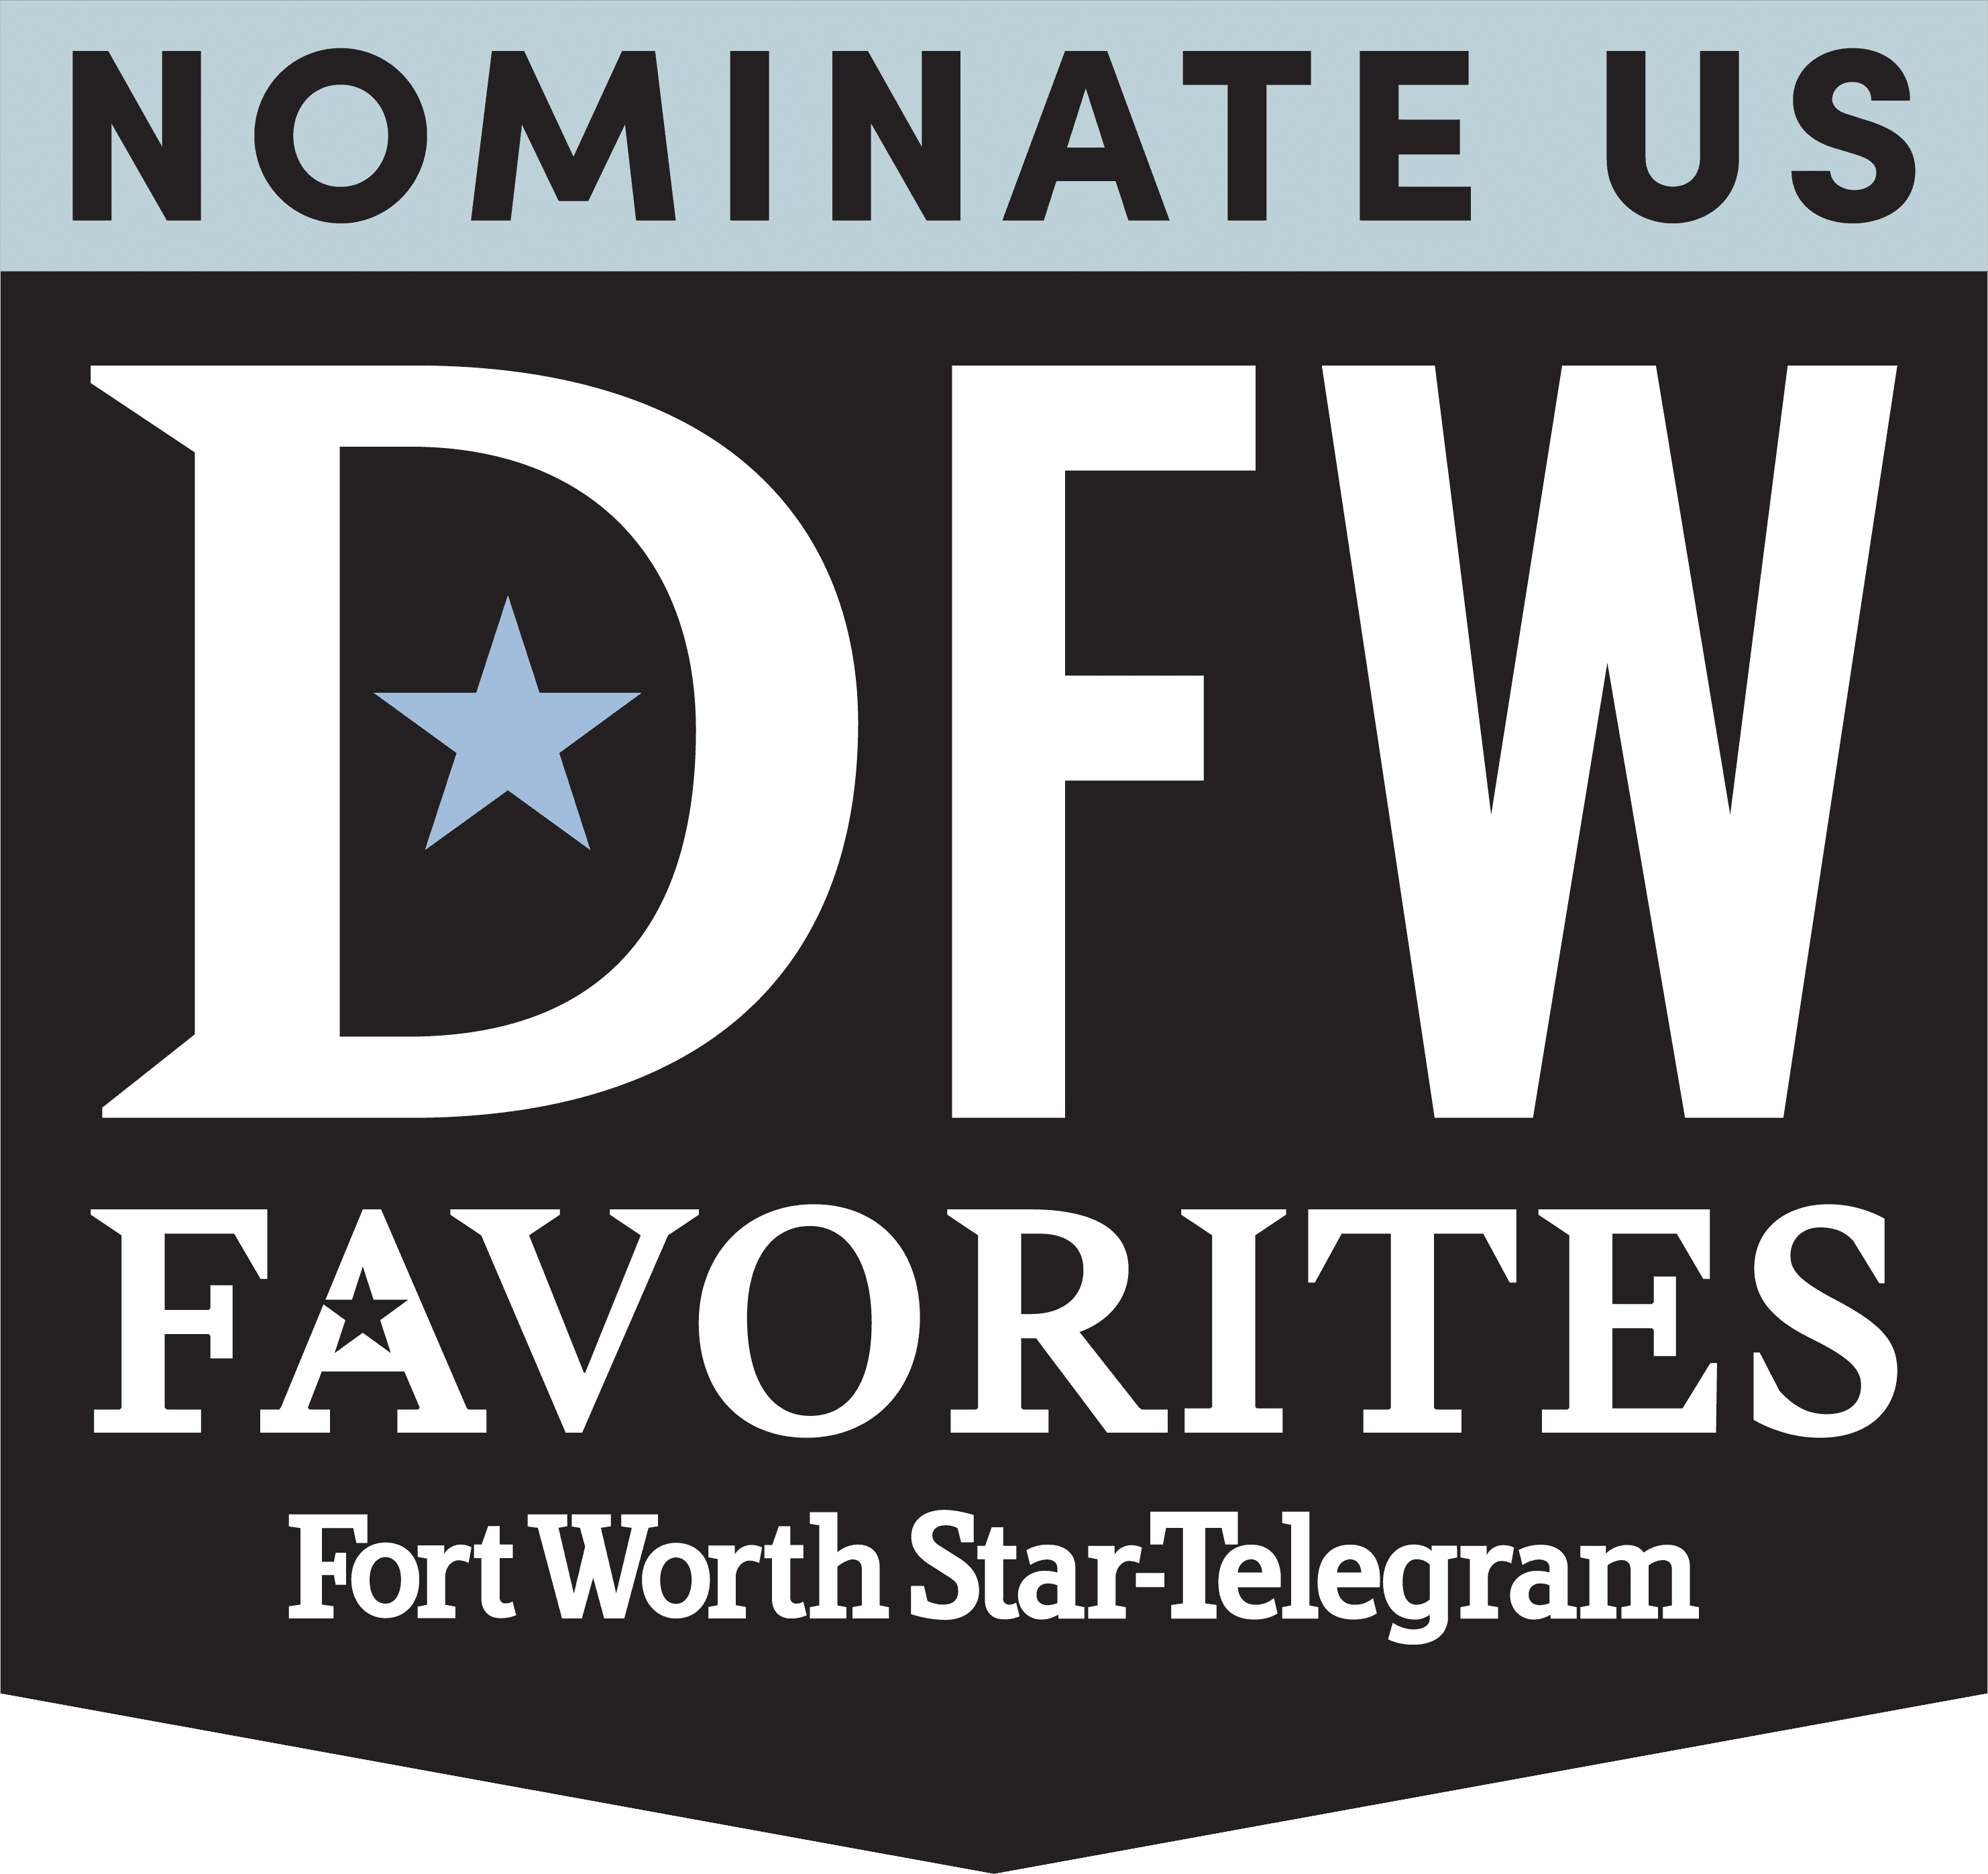 Fort Worth Star-Telegram DFW Favorites - We Need Your Nomination